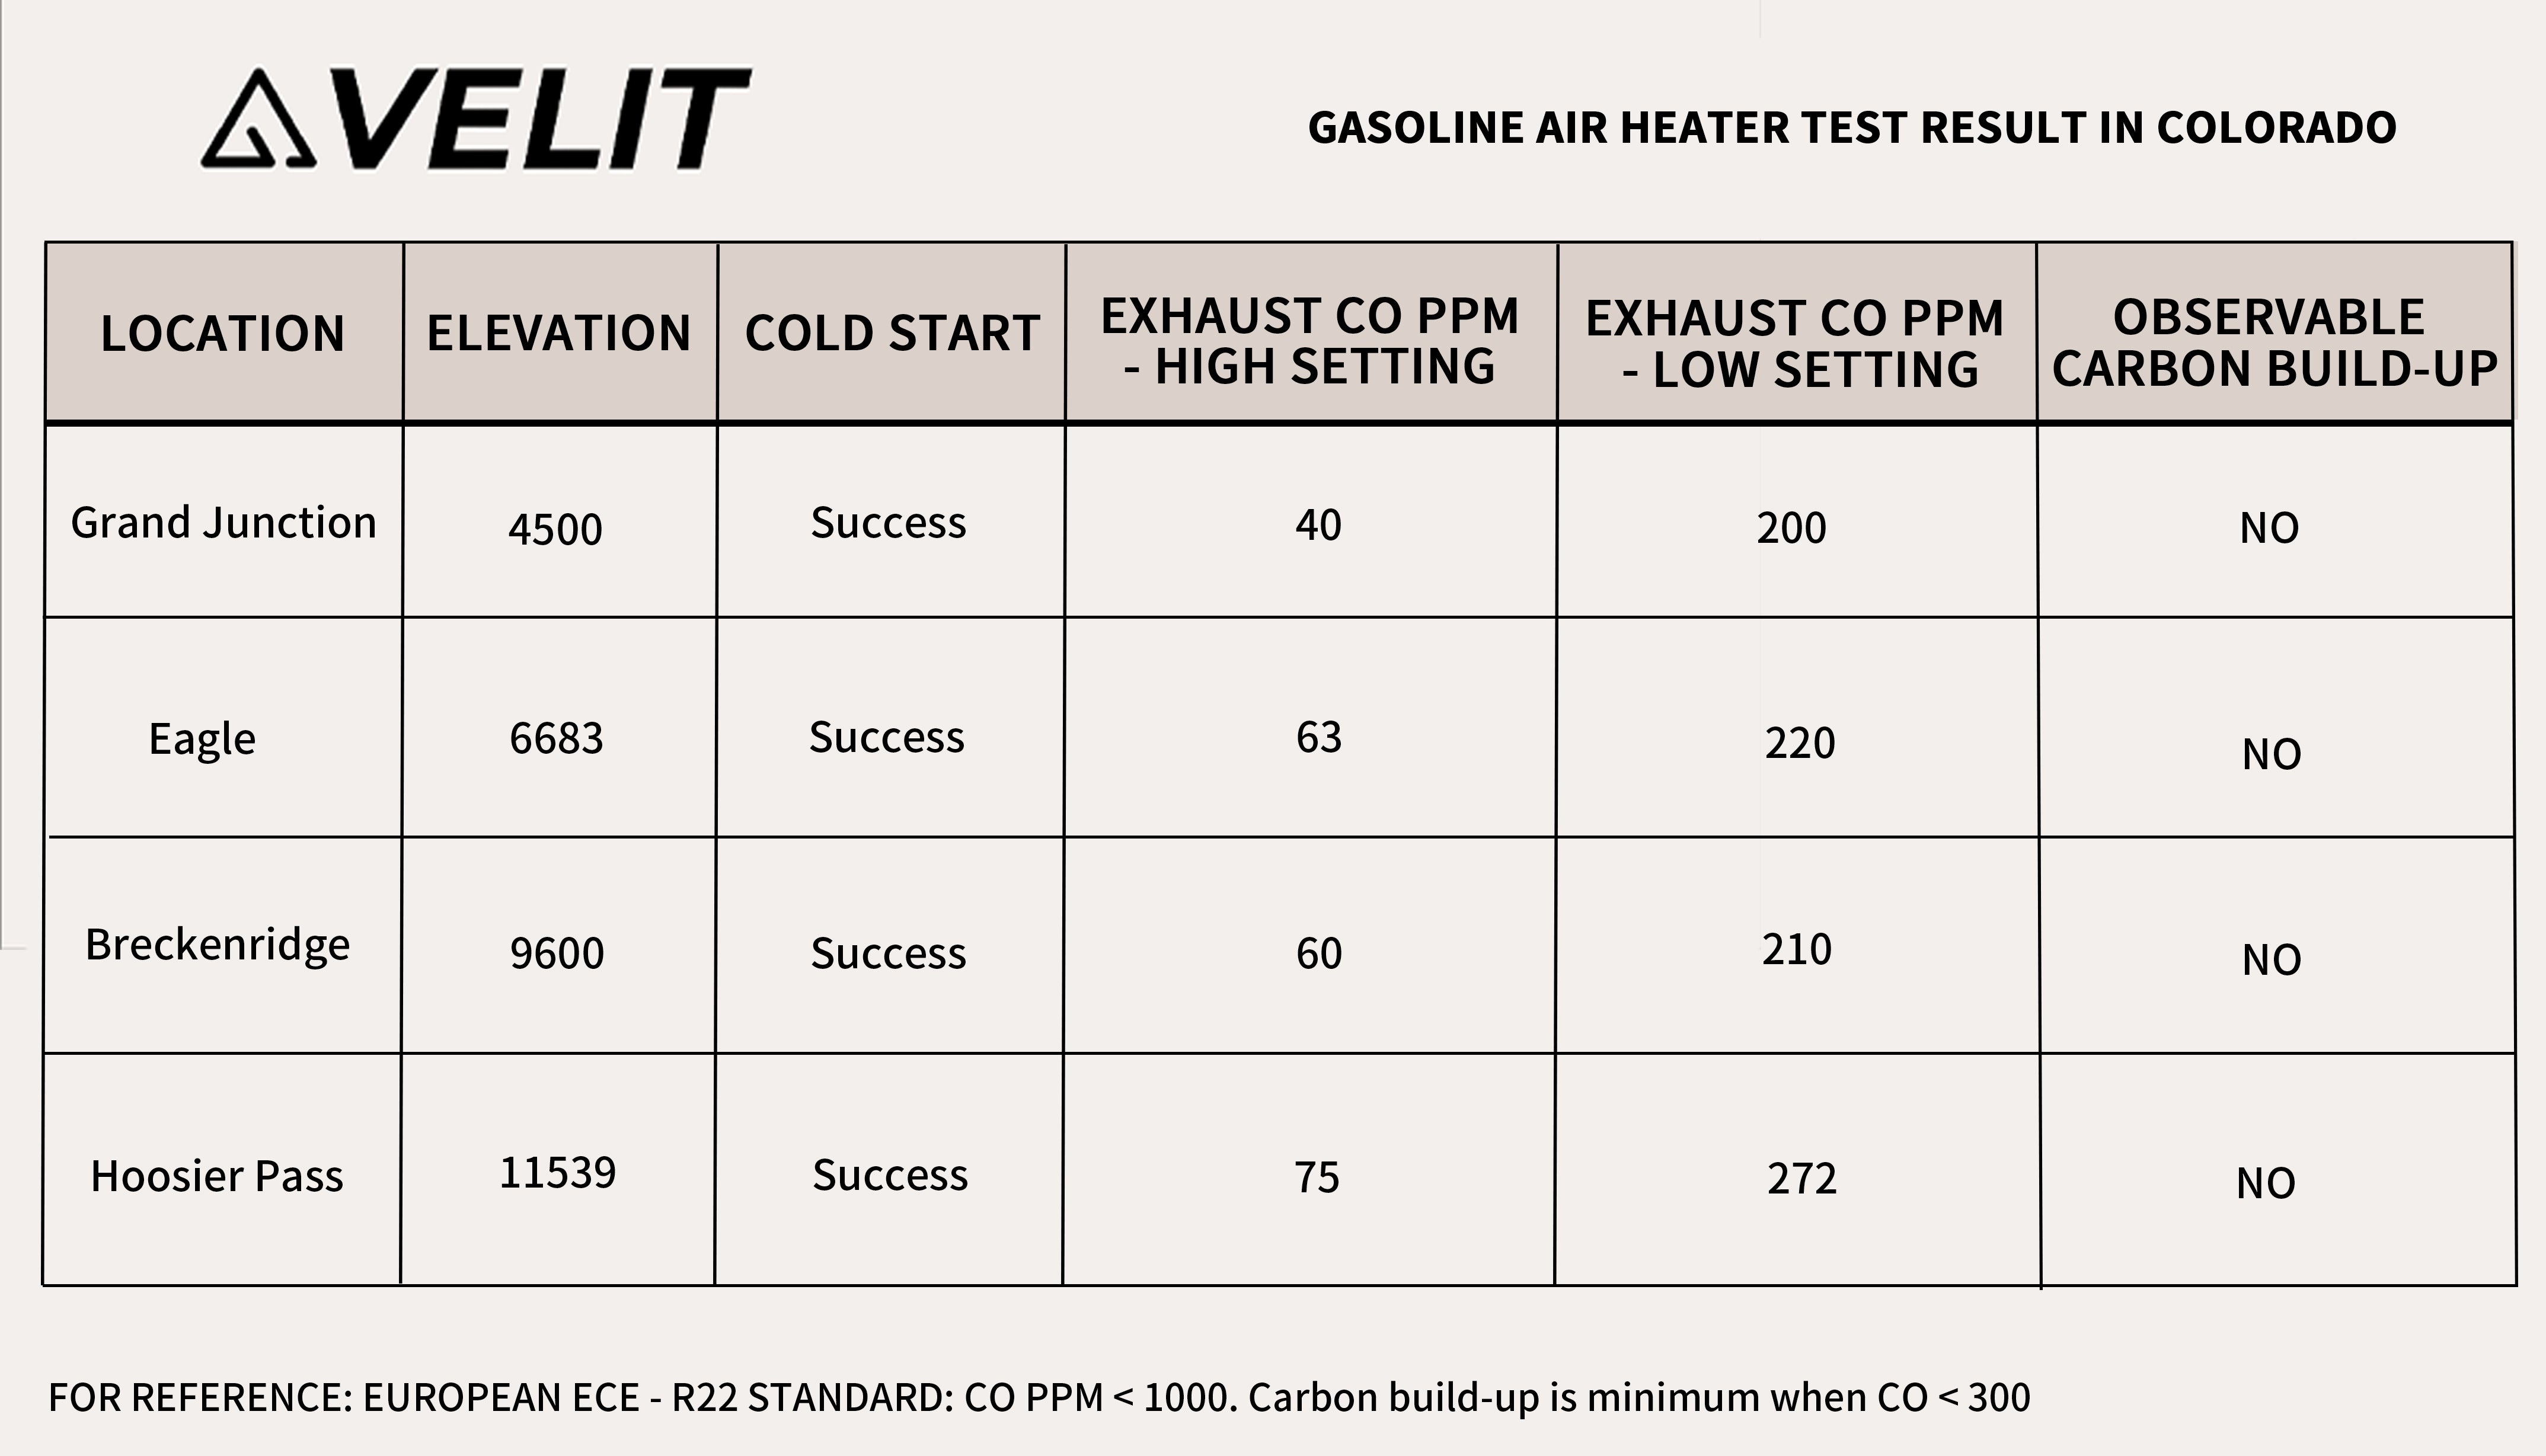 [In Stock]VELIT Gasoline/Diesel Air Heater 14000Btu 4000W - velitcamping